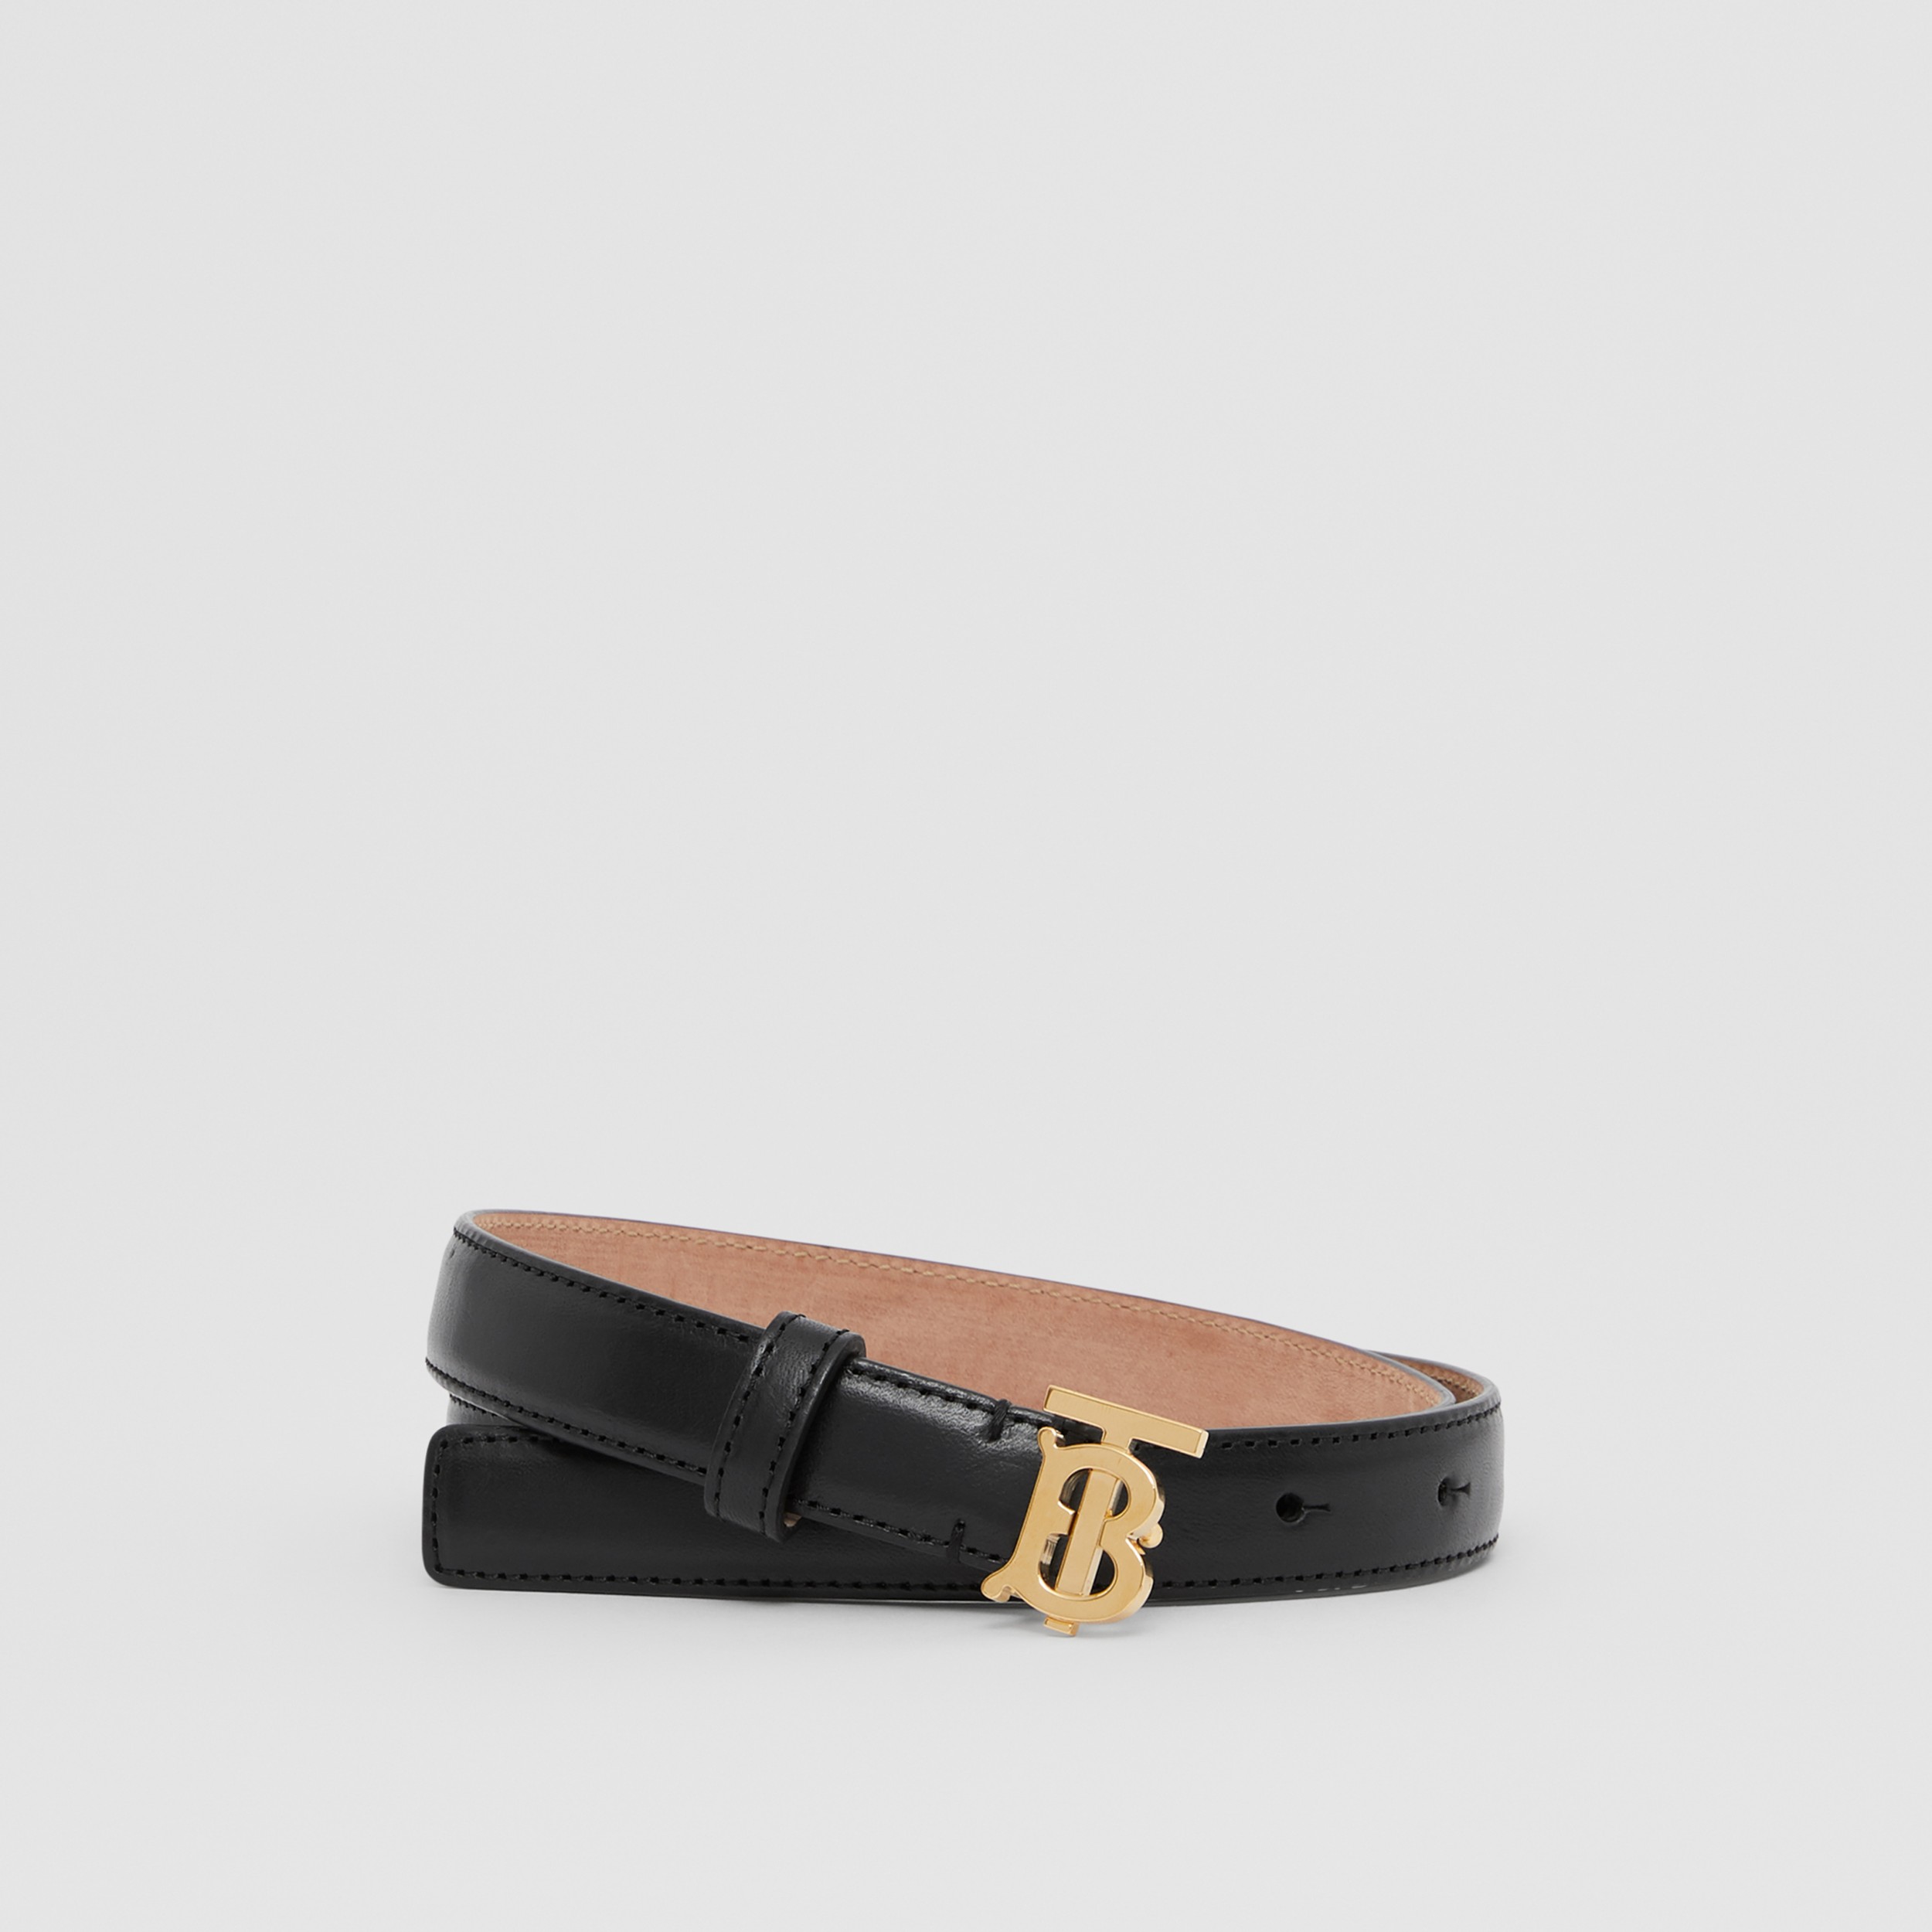 Monogram Leather Belt in Black/light Gold - Women | Burberry Hong S.A.R.,